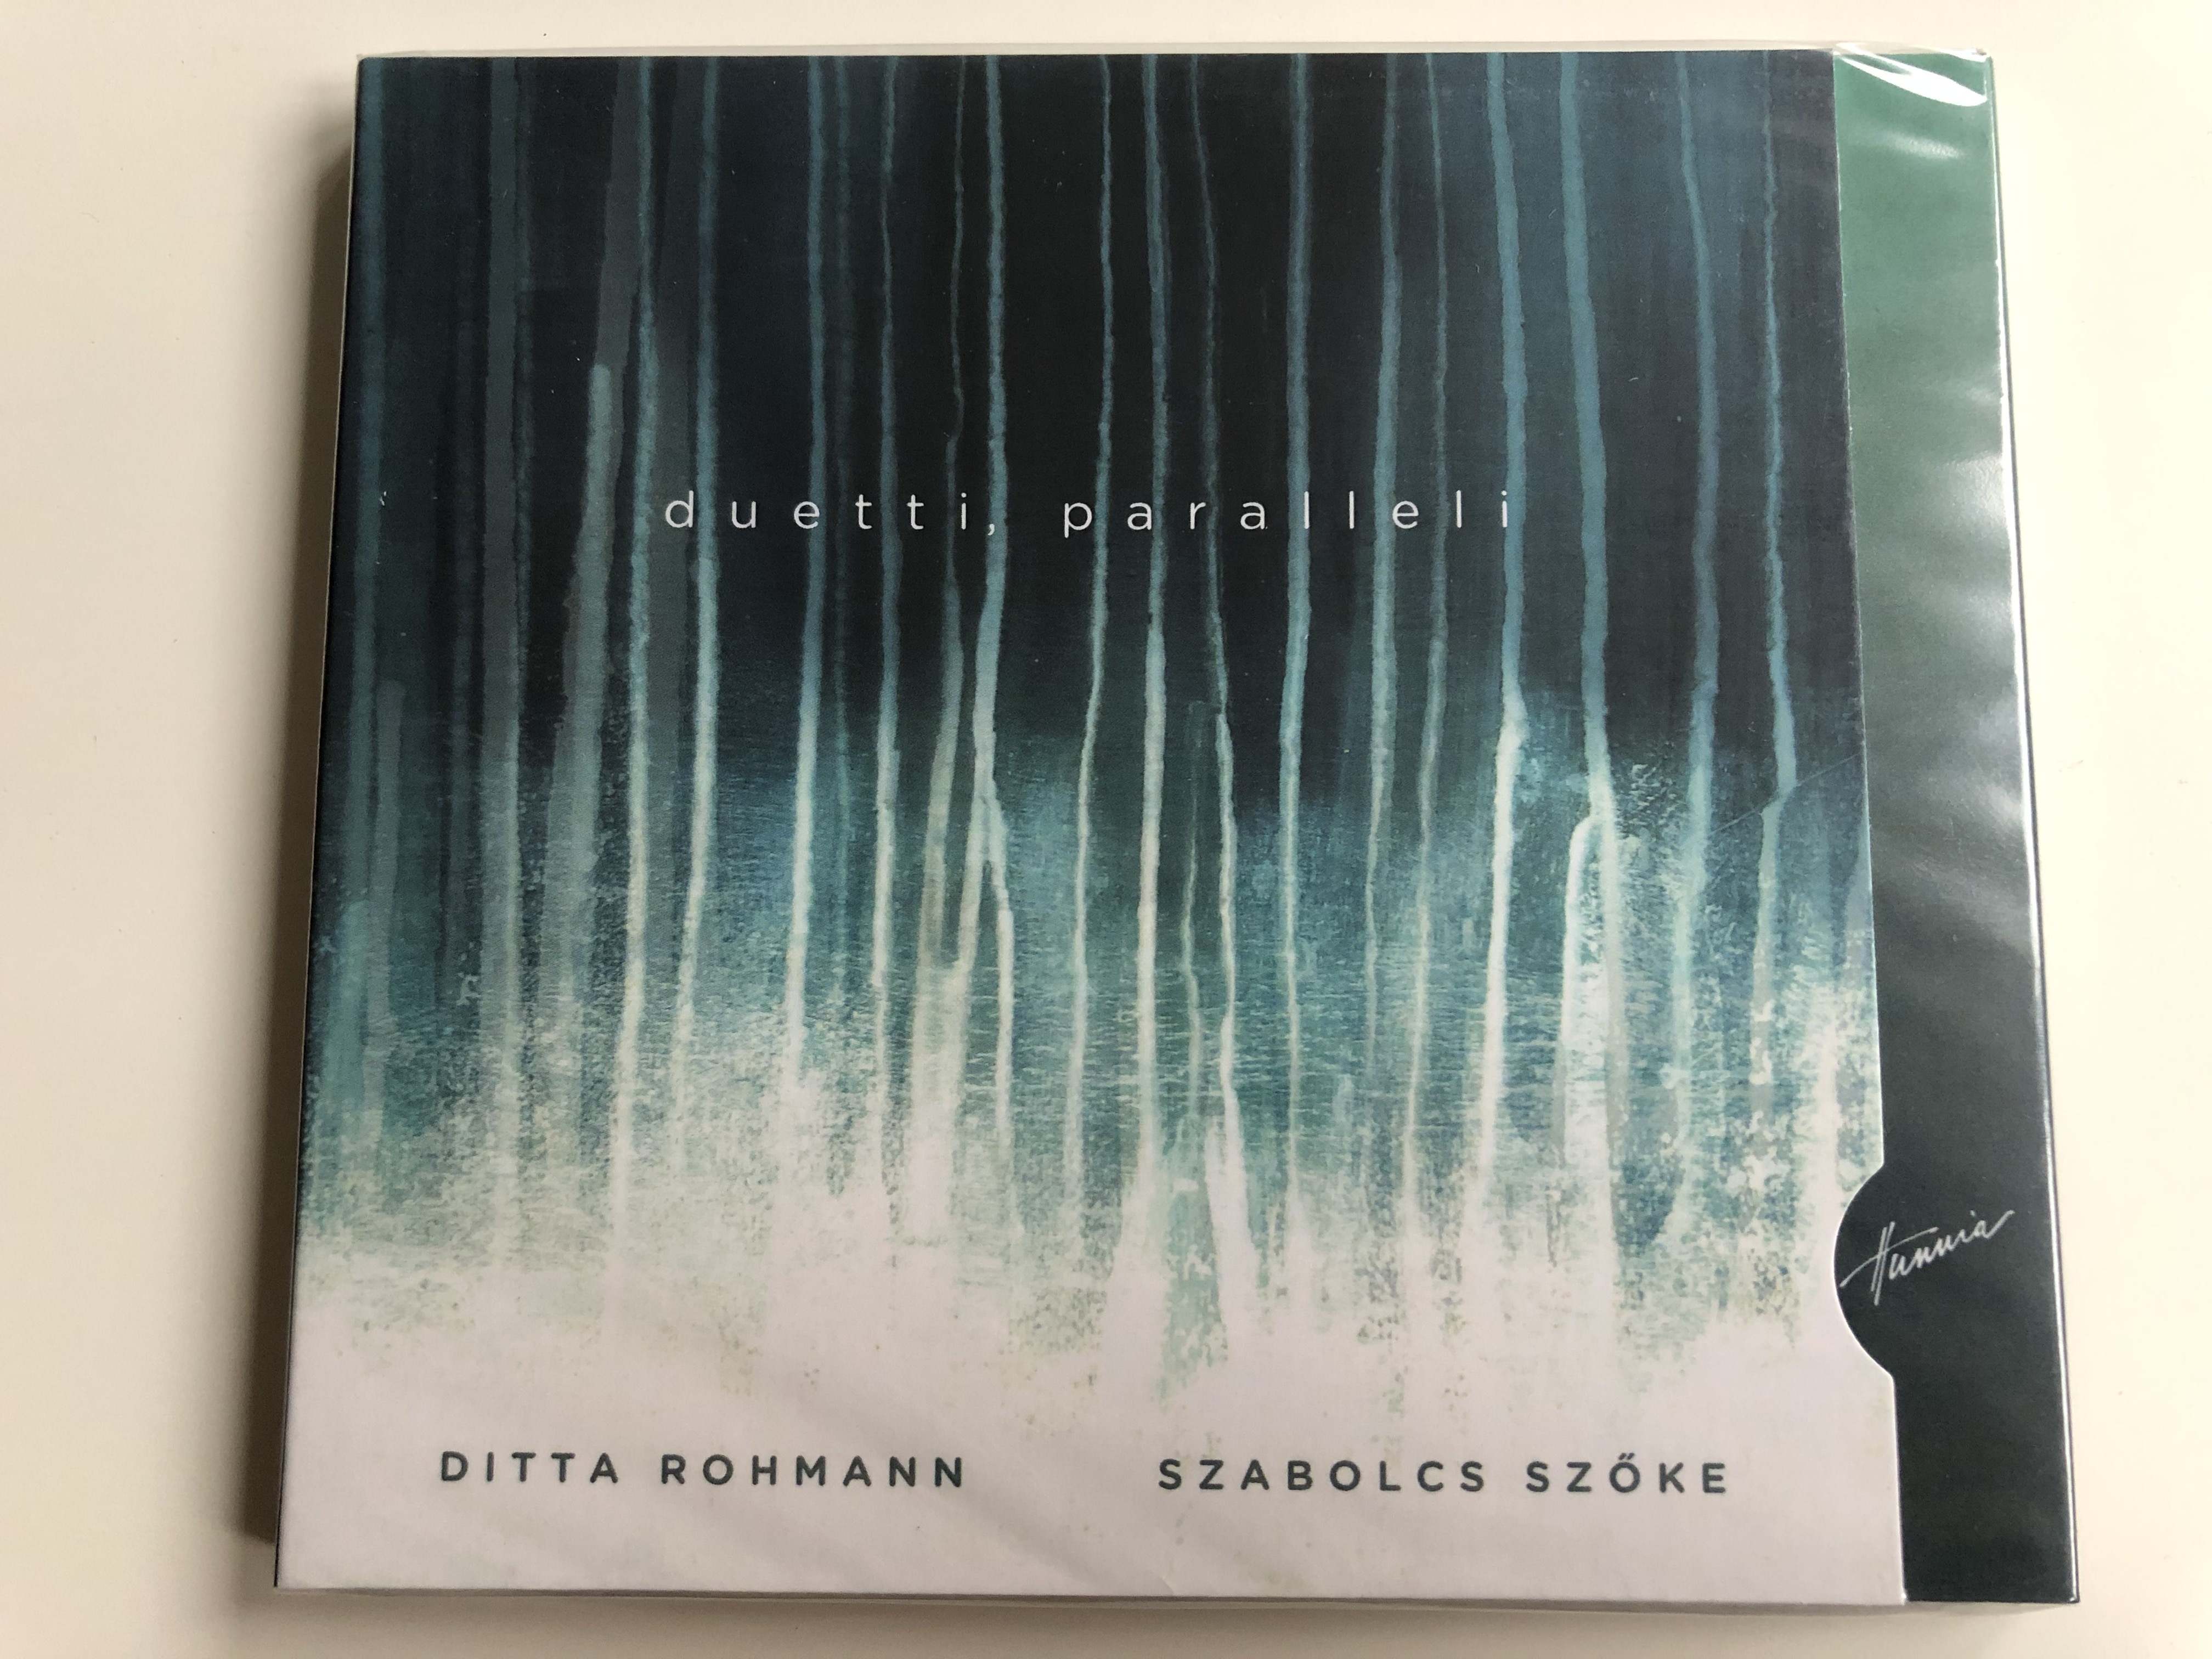 duetti-paralleli-ditta-rohmann-szabolcs-szoke-hunnia-records-film-production-audio-cd-2019-hrcd1909-1-.jpg